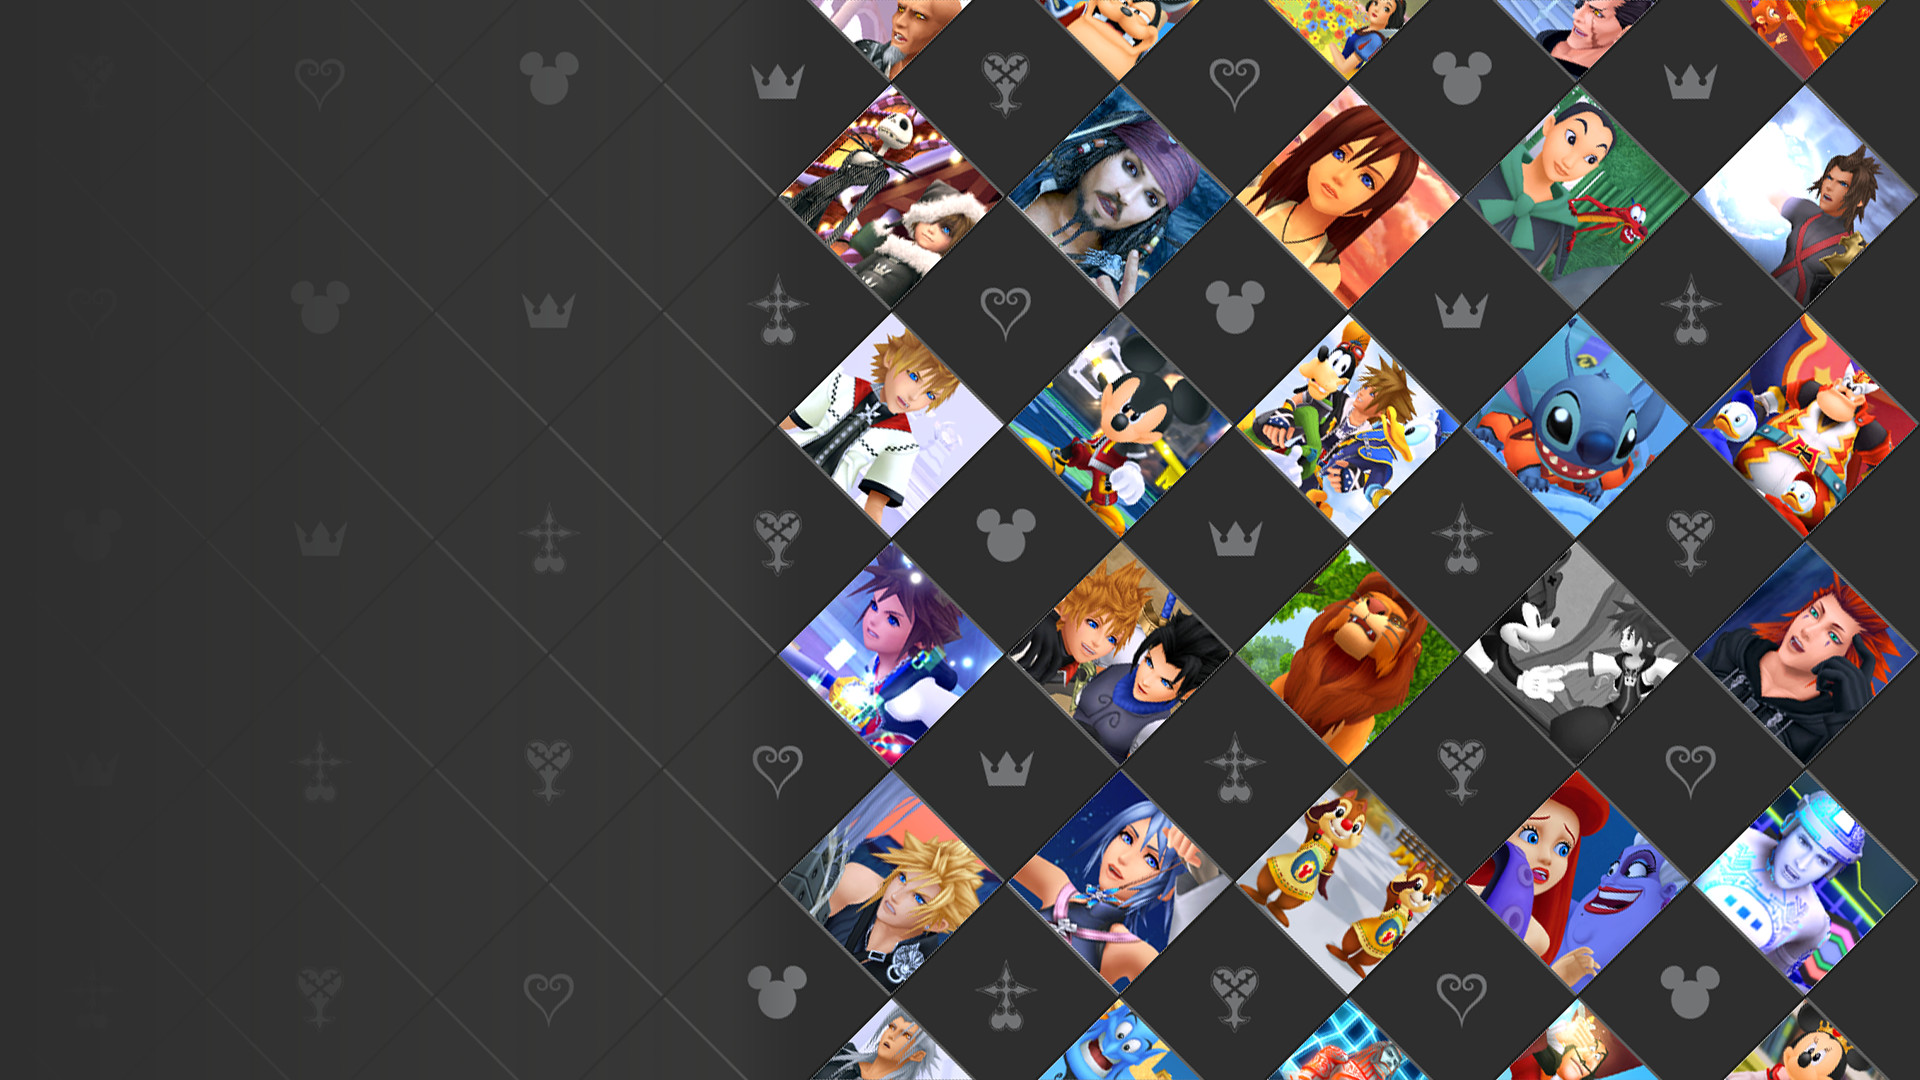 Explore Kingdom Hearts Wallpaper and more